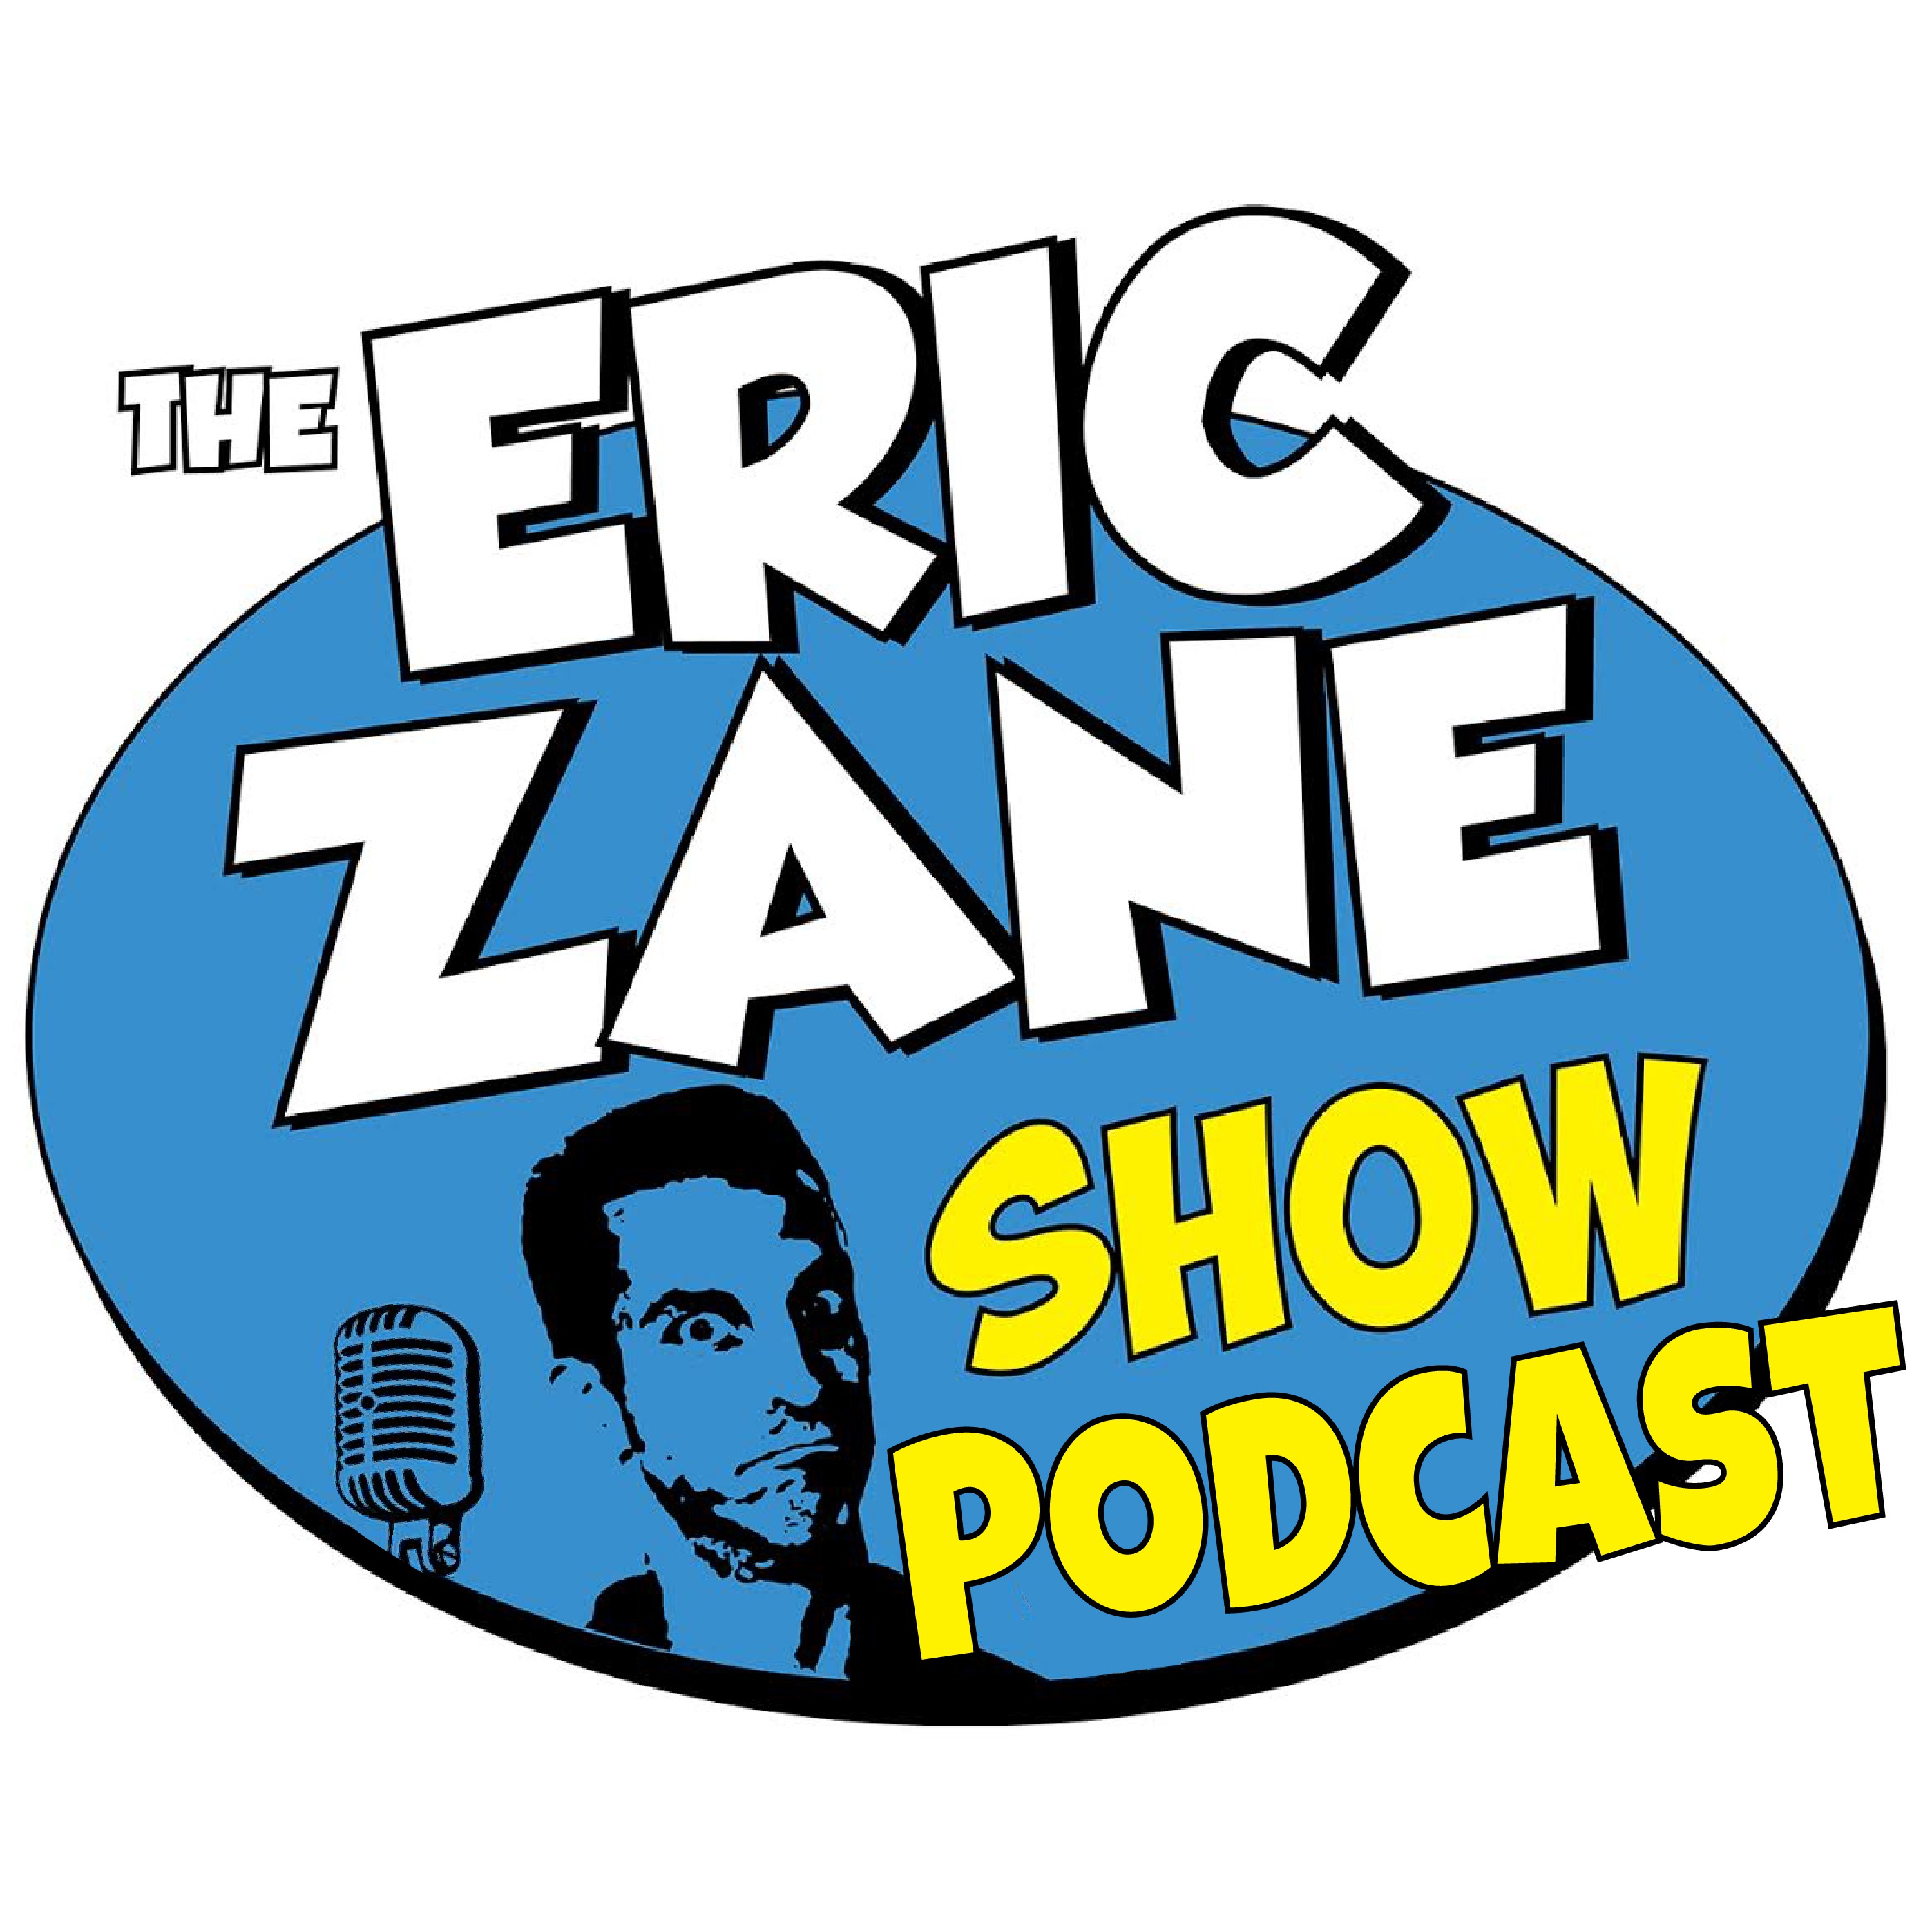 Eric Zane Show Podcast 863 Zane Show listener witnesses wrong way driver crash.